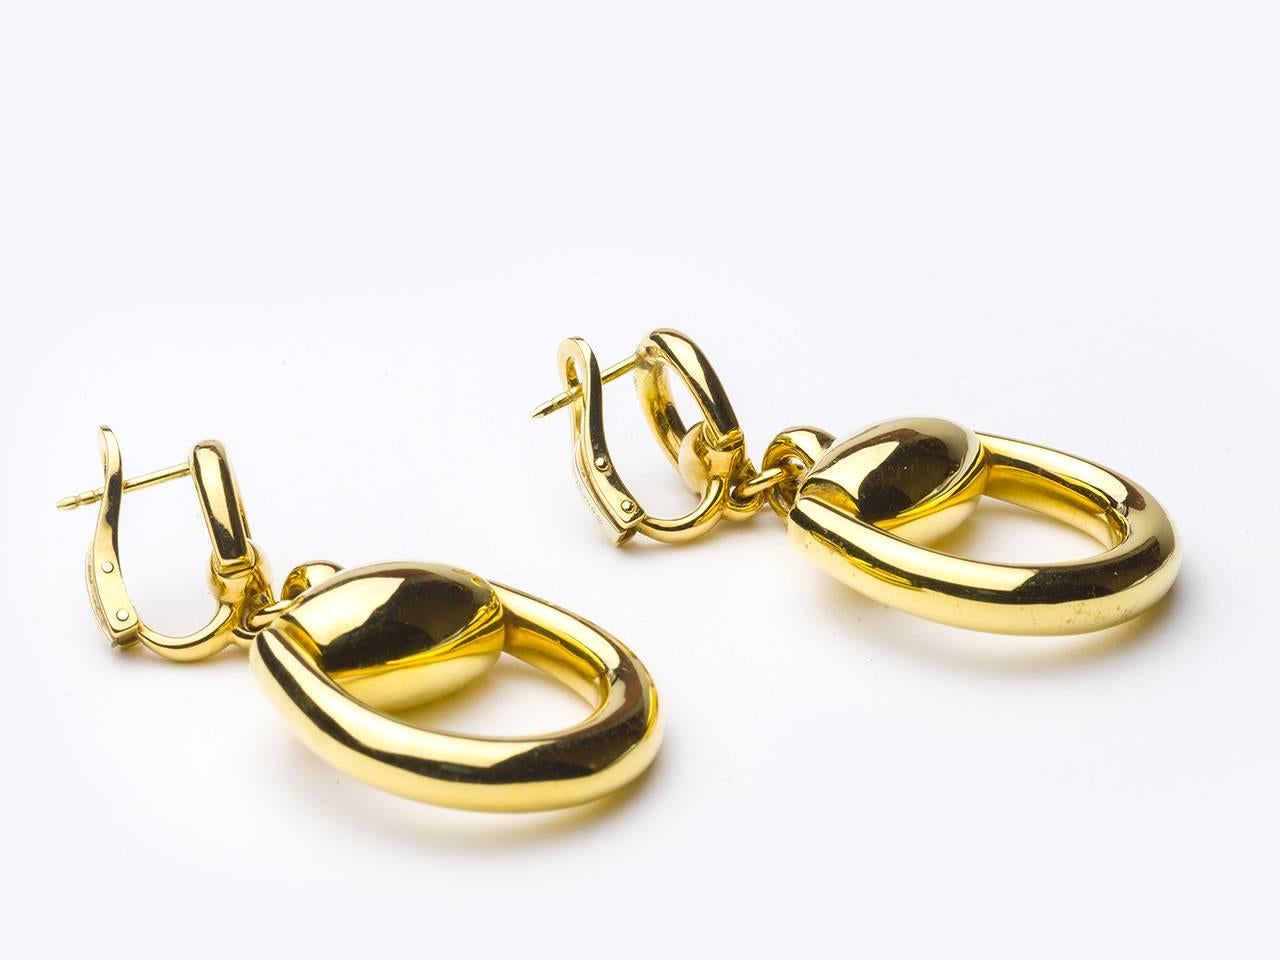 18k gold earpendants, signed GUCCI, AU750